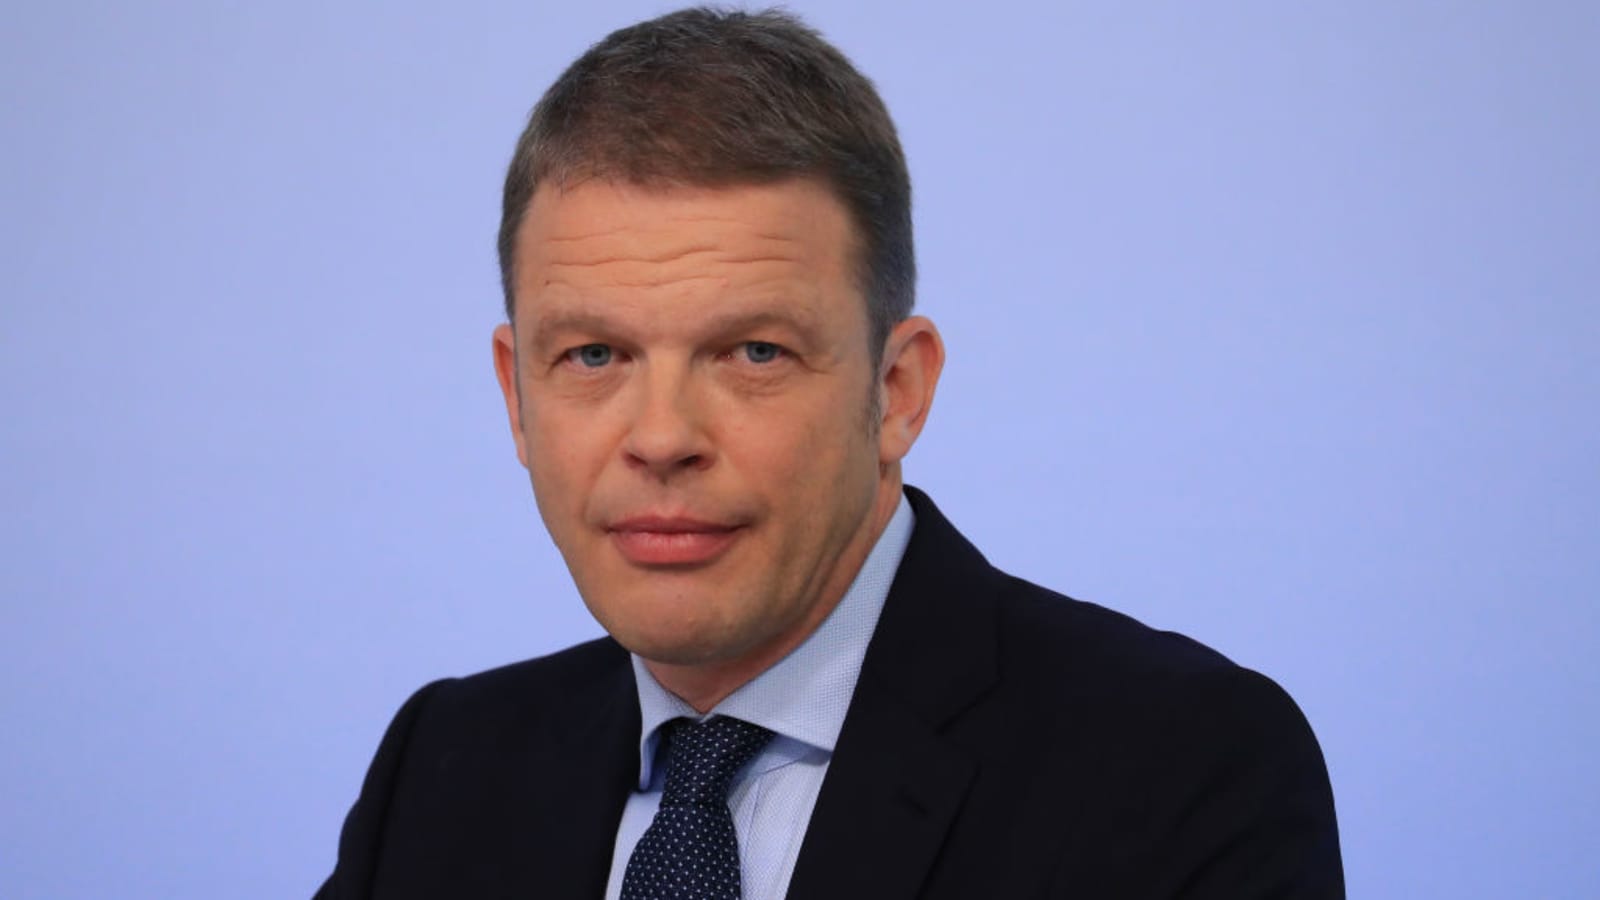 Deutsche Bank picks Christian Sewing as new CEO, replacing John Cryan